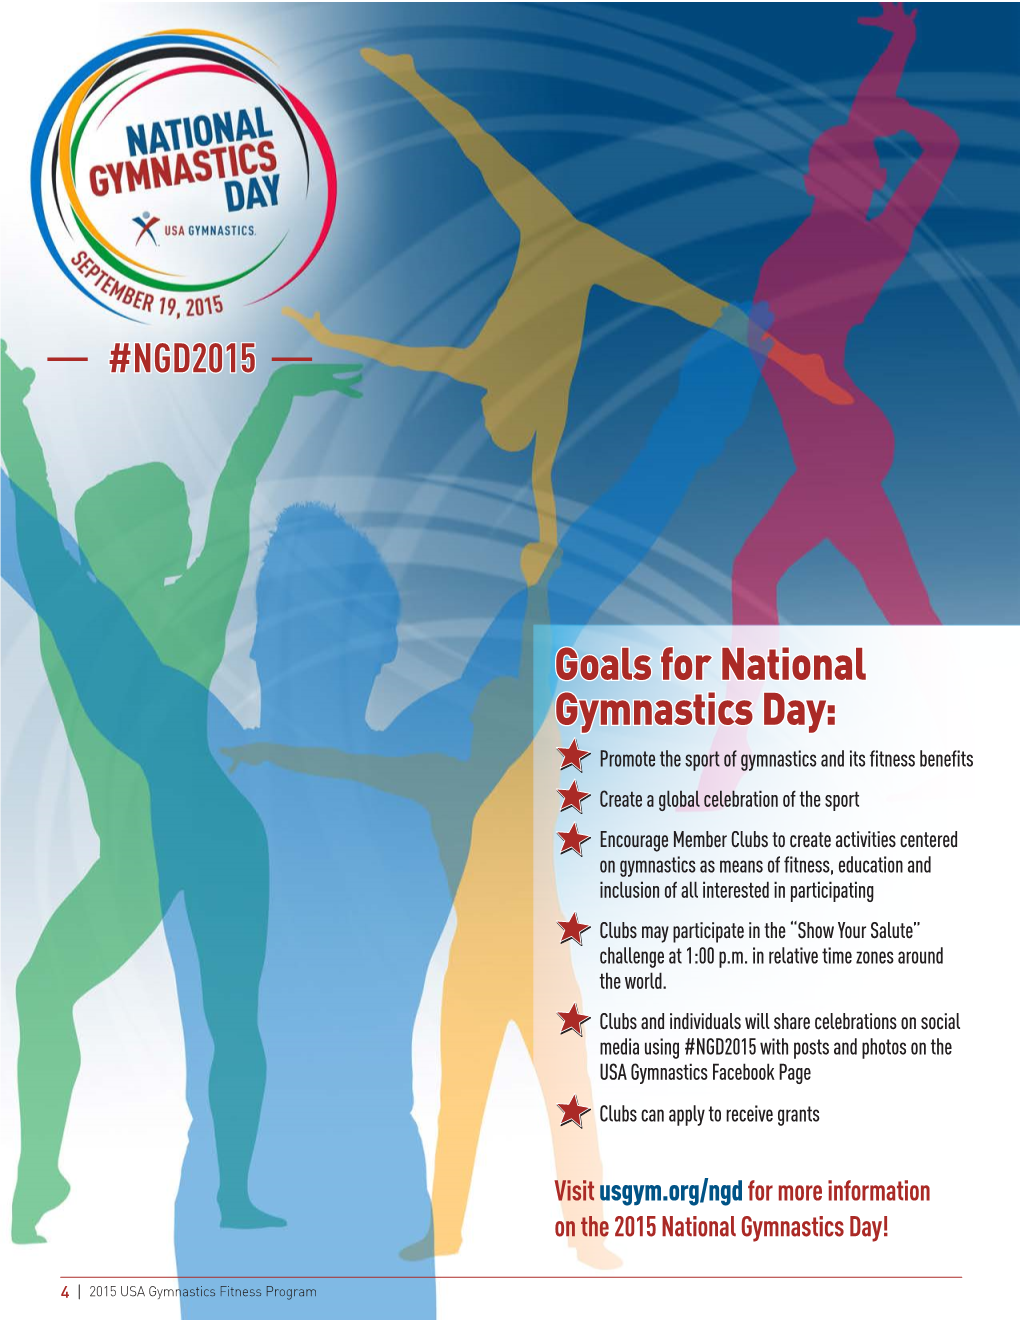 Goals for National Gymnastics Day